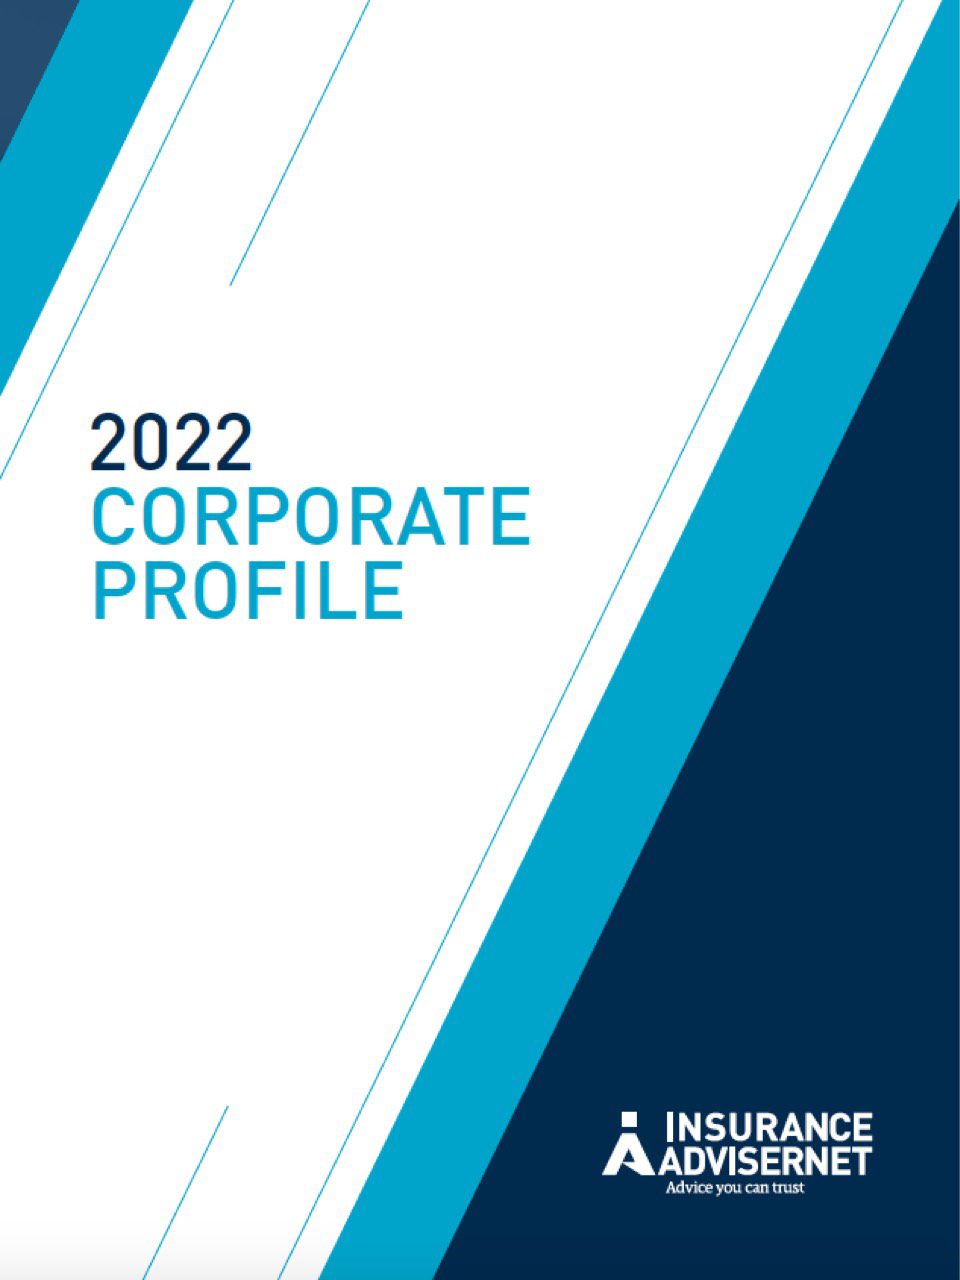 Insurance Advisernet Corporate Profile 2022